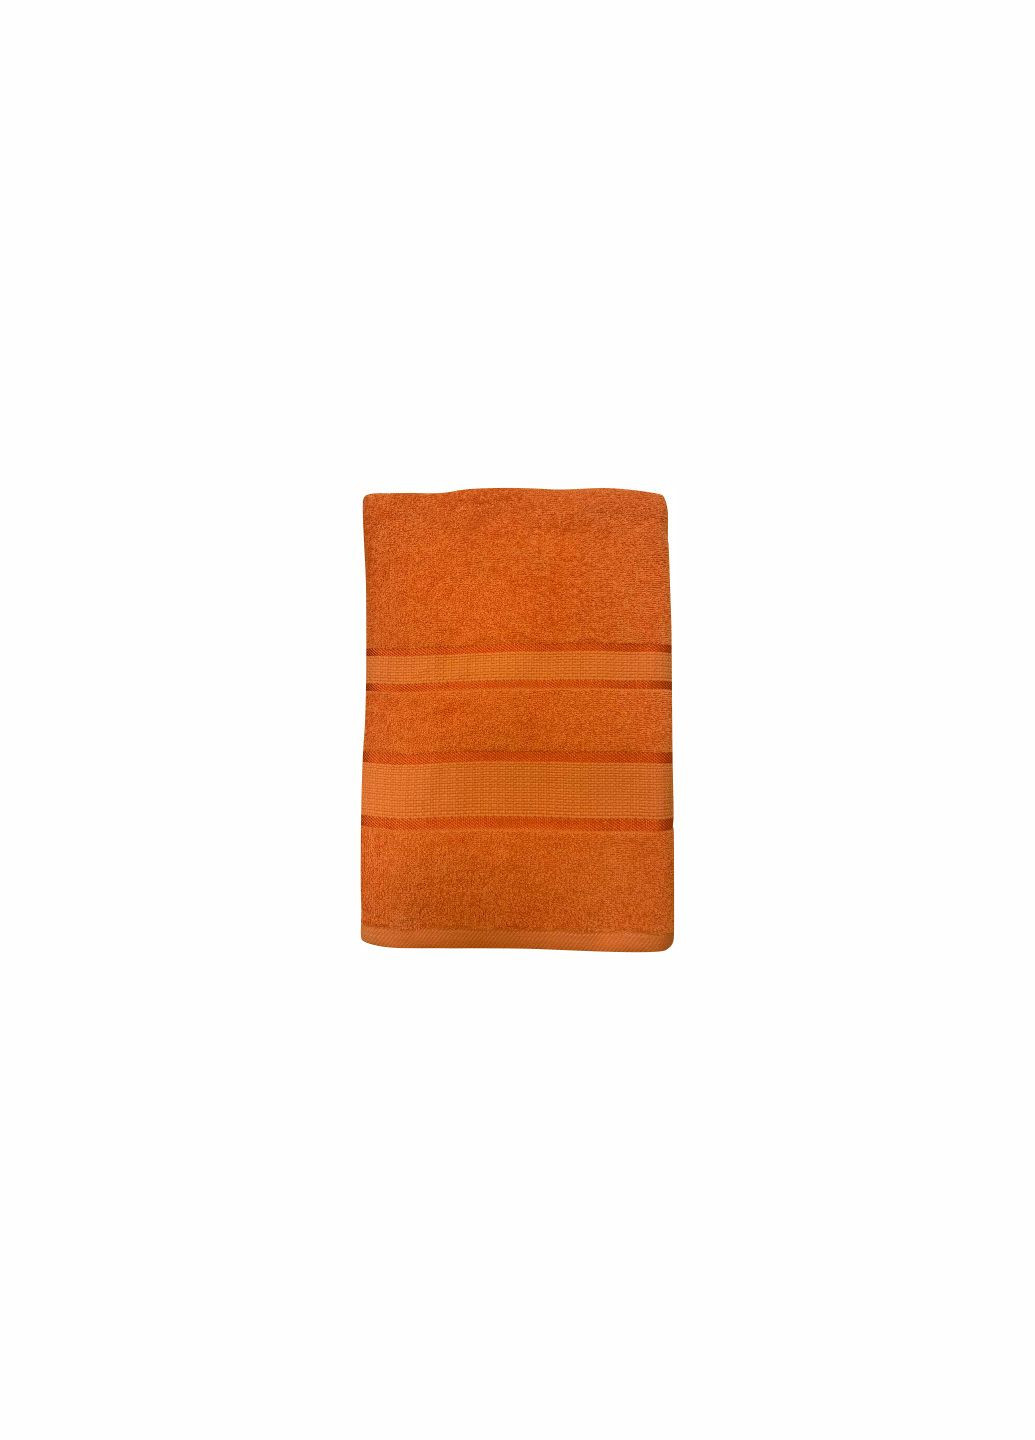 Fadolli Ricci полотенце махровое — оранжевый 70*140 (400 г/м²) оранжевый производство -